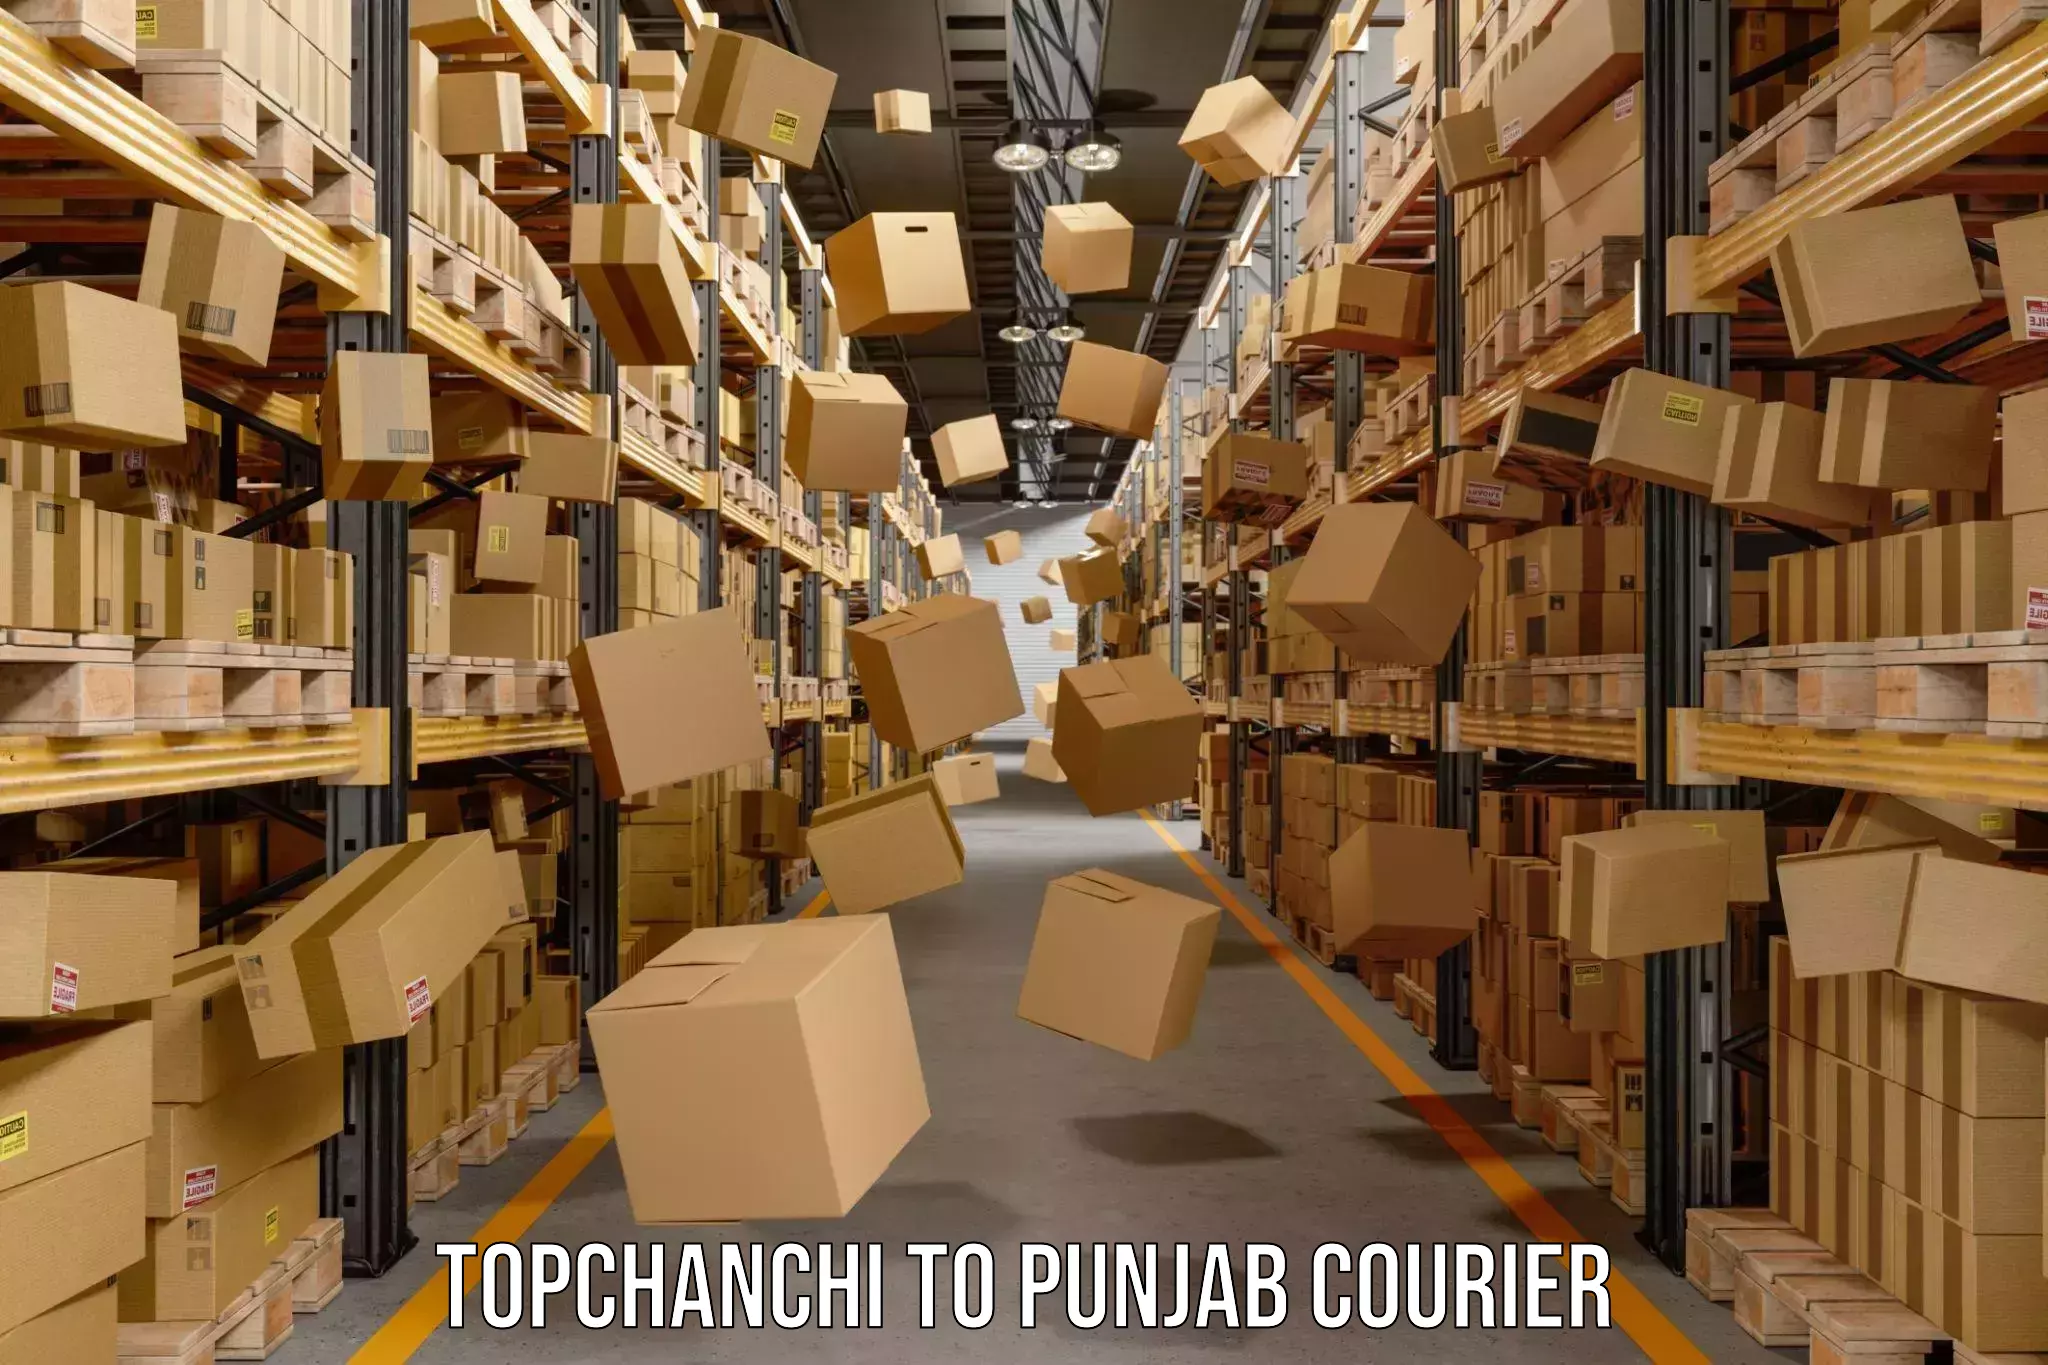 24/7 courier service Topchanchi to Dera Bassi